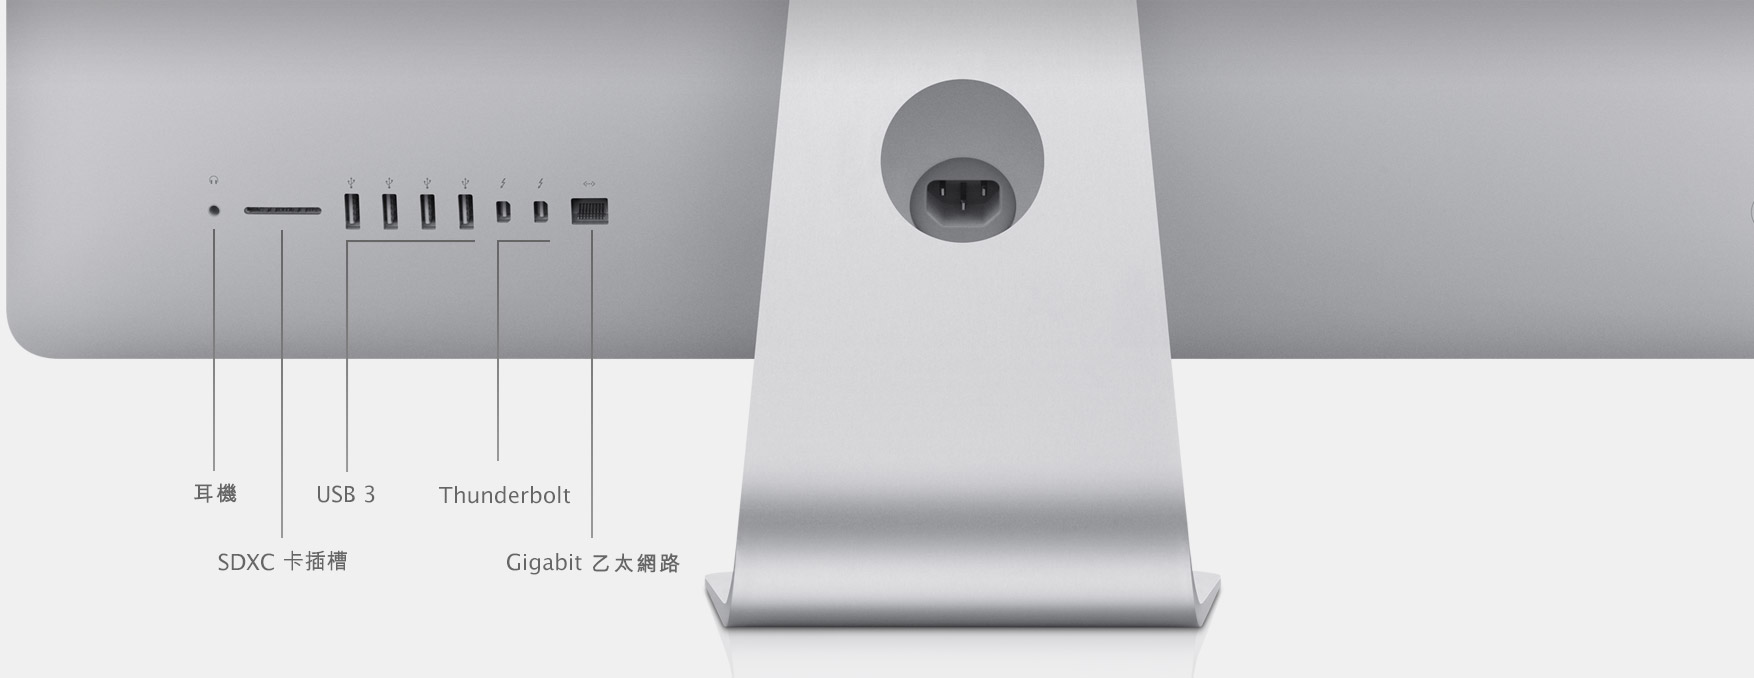 iMac (21.5 英吋, 2013 年末) - 技術規格(台灣)